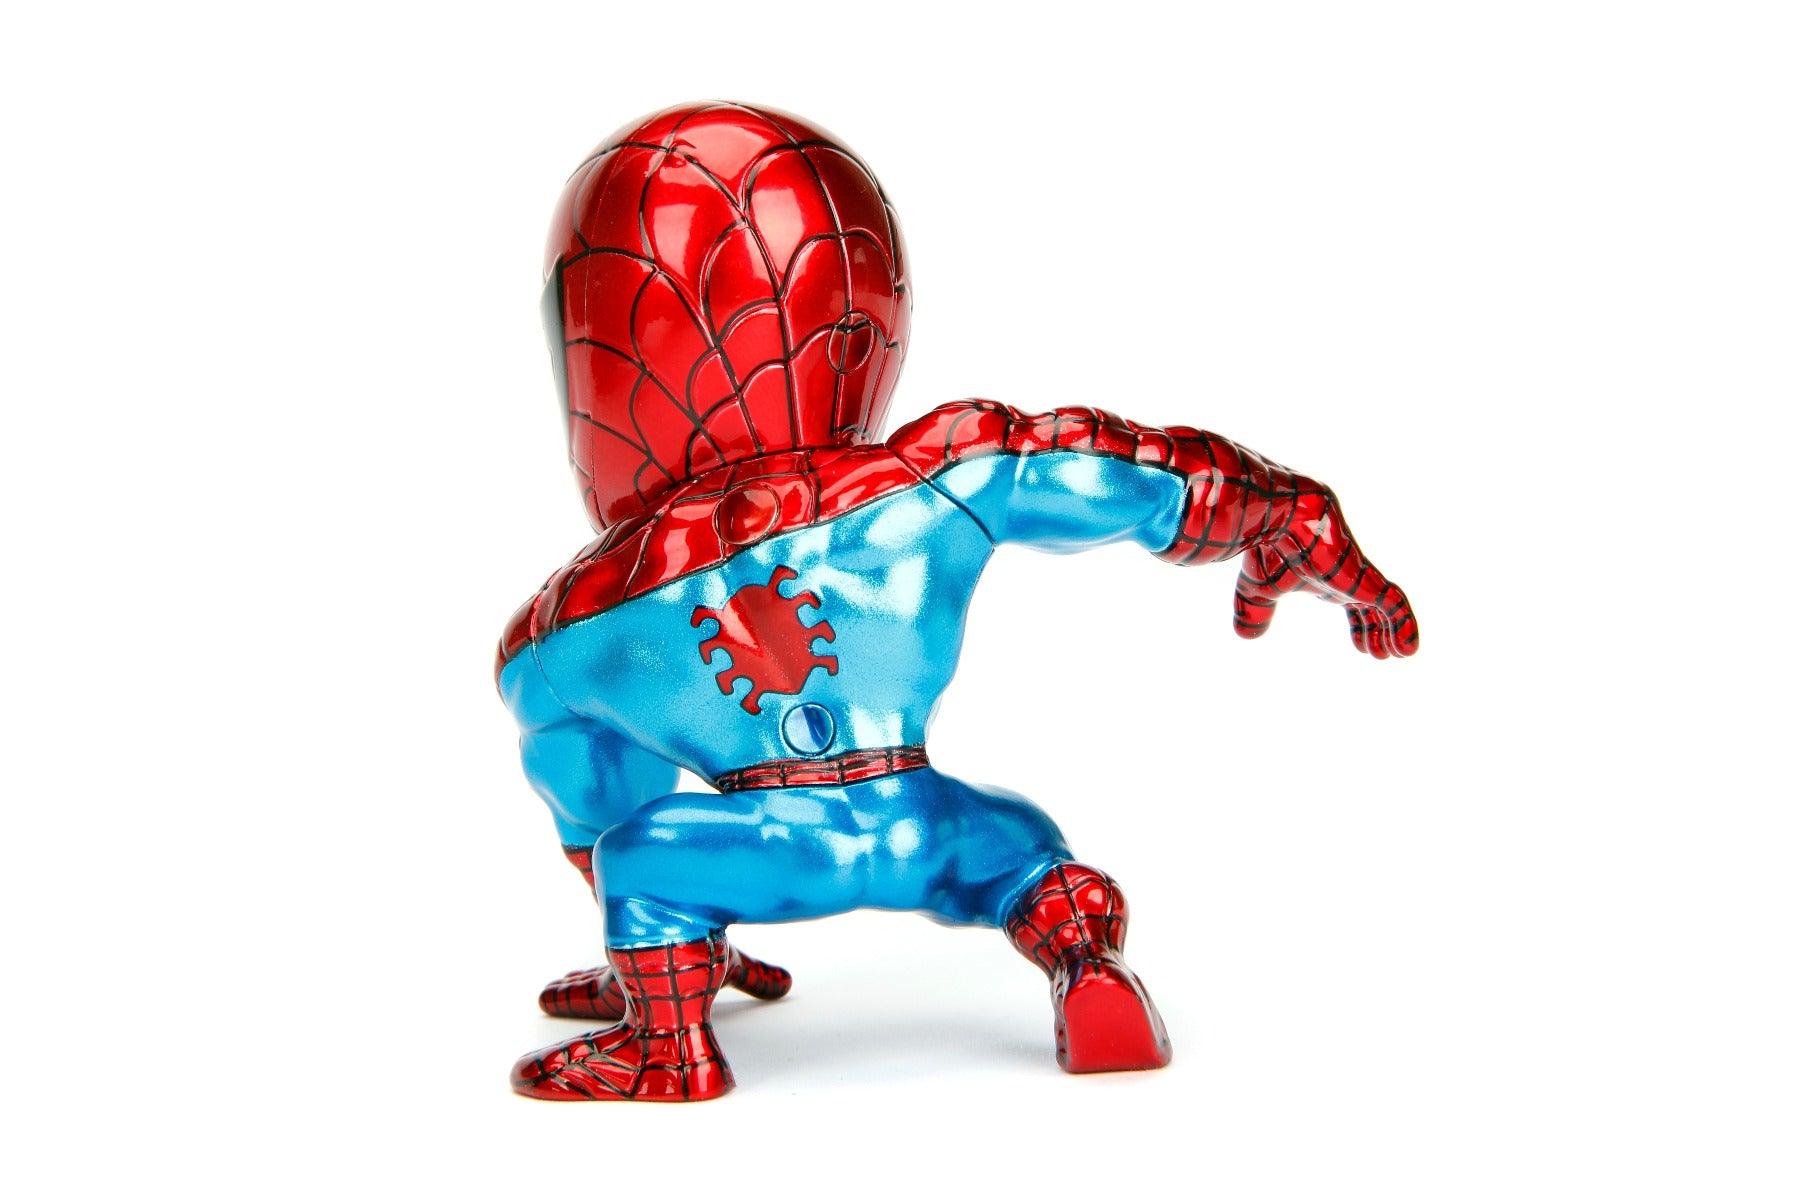 Jada Toys Diecast Metal Marvel Classic Spiderman 4 inch Action Figure